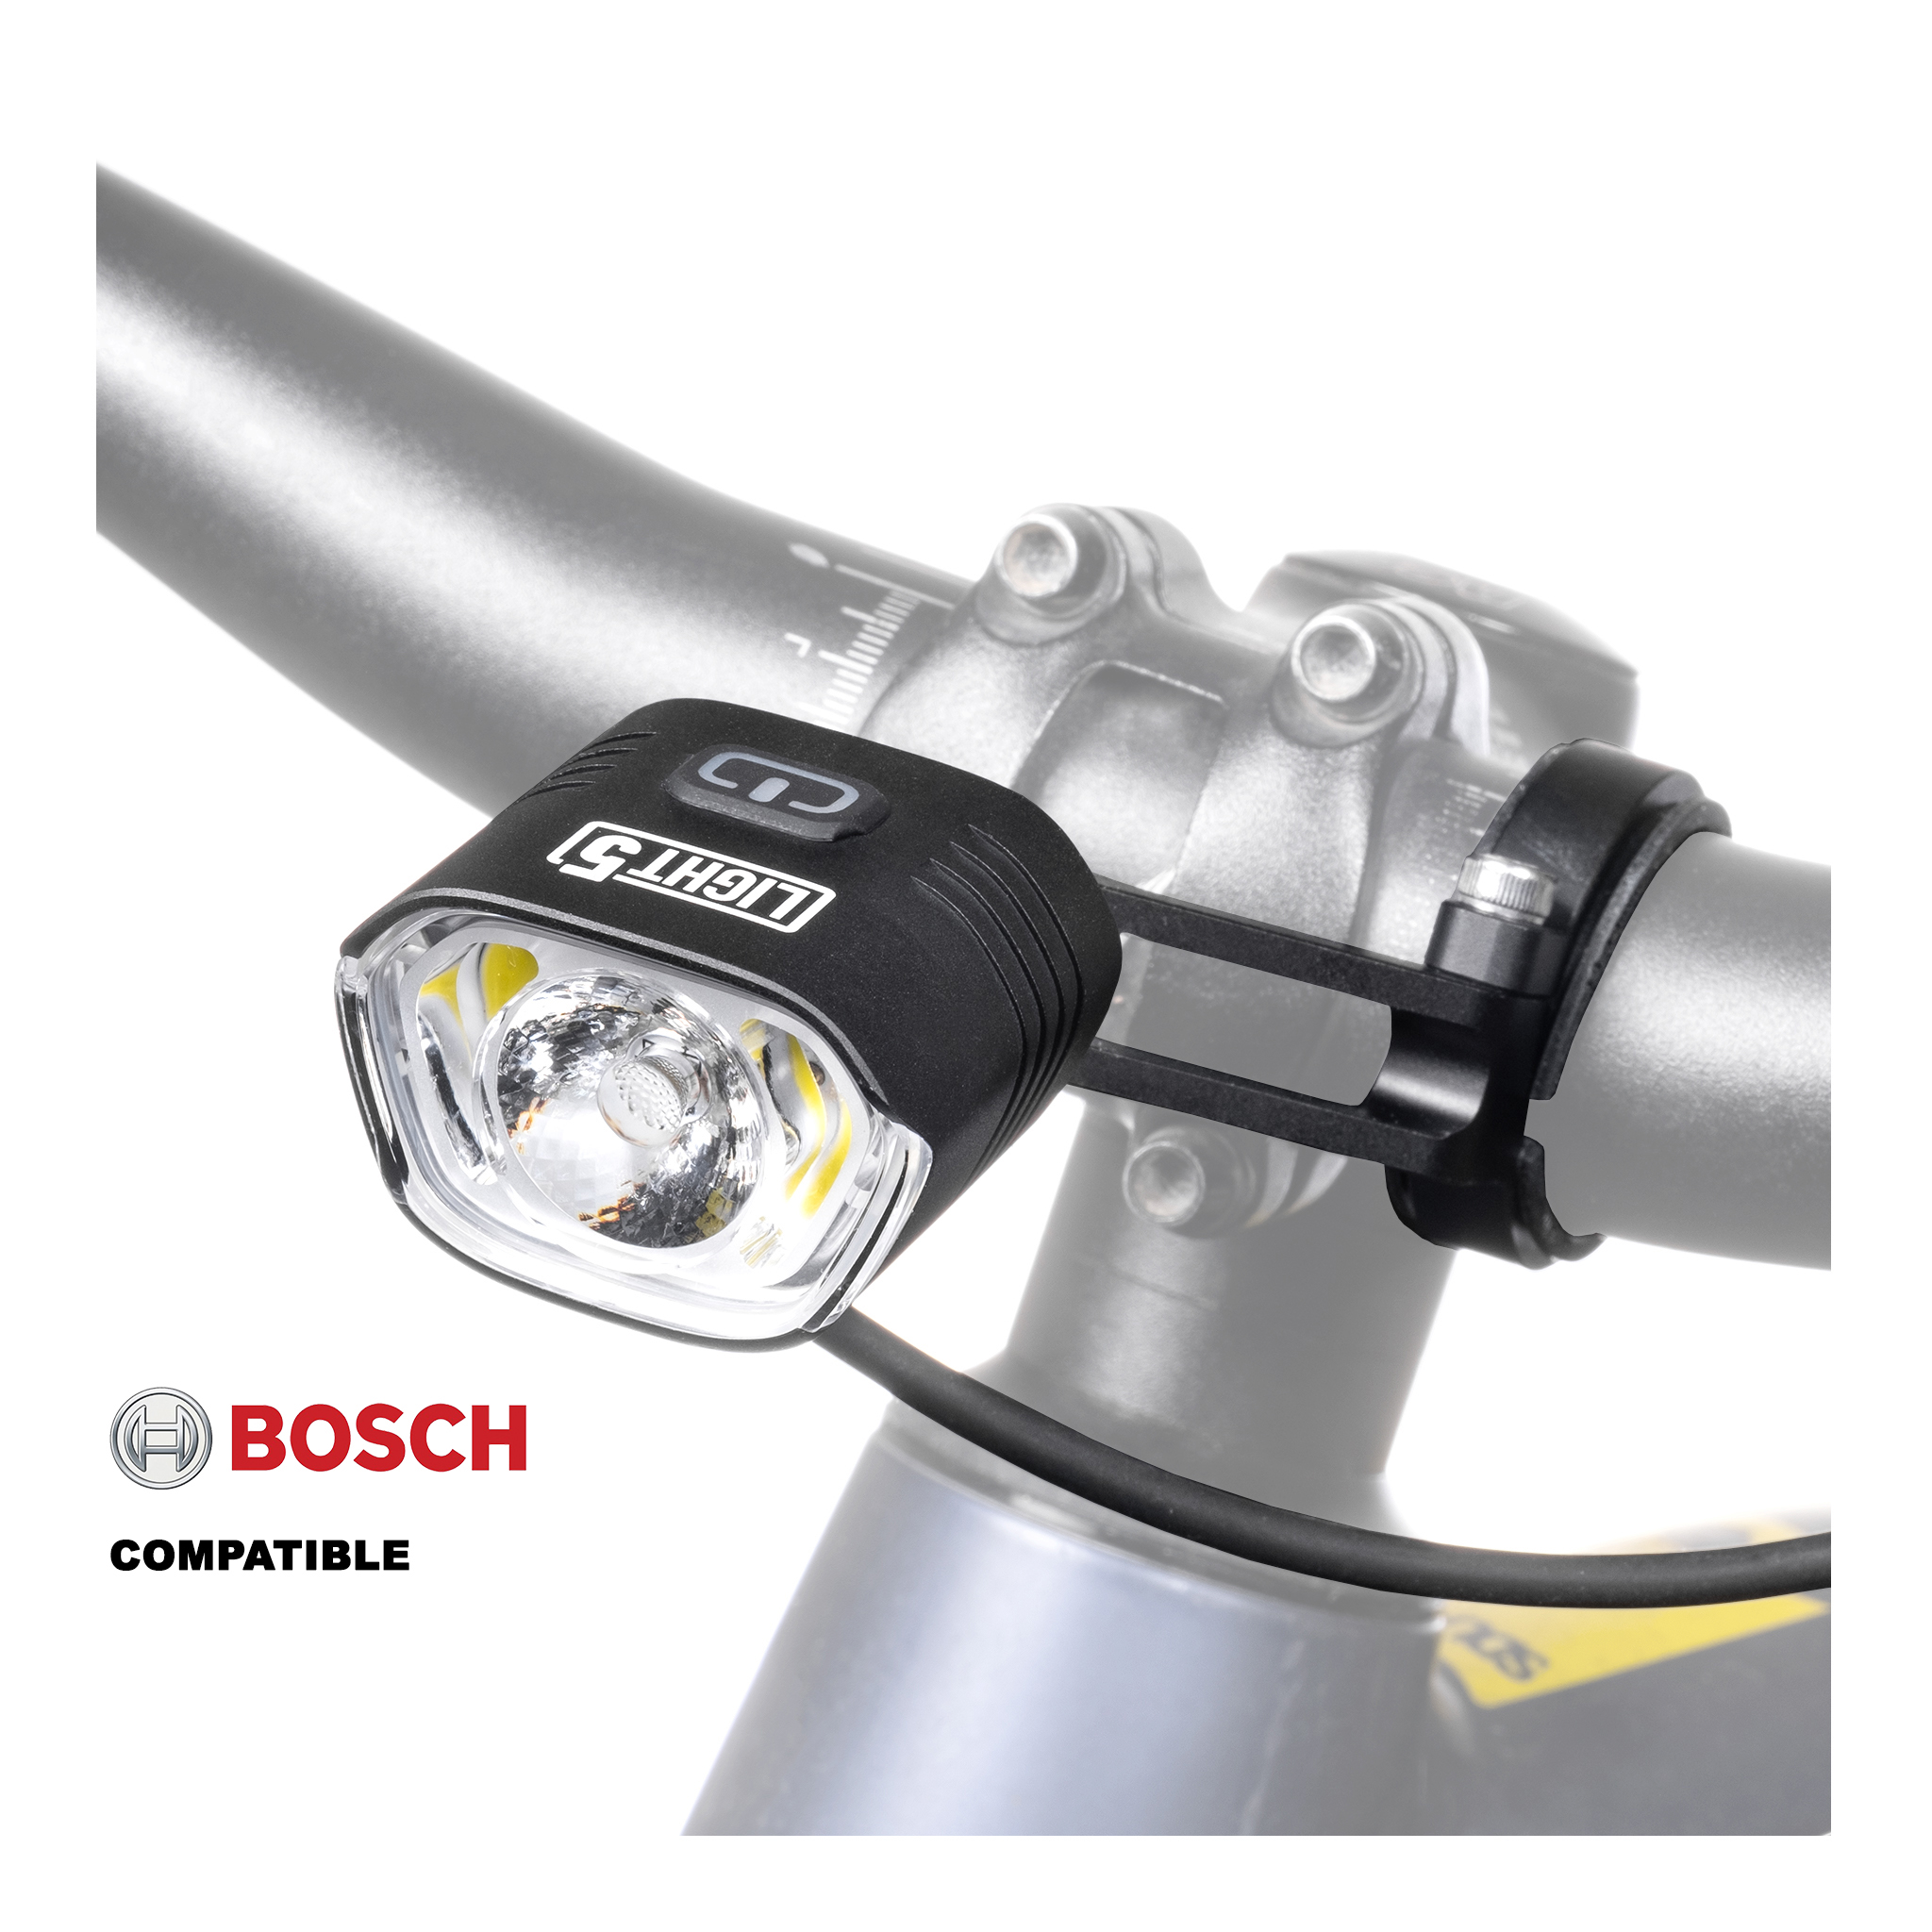 Cykellygte til elcykel Light5 EB1000 Bosch, 1000 lm, Bosch